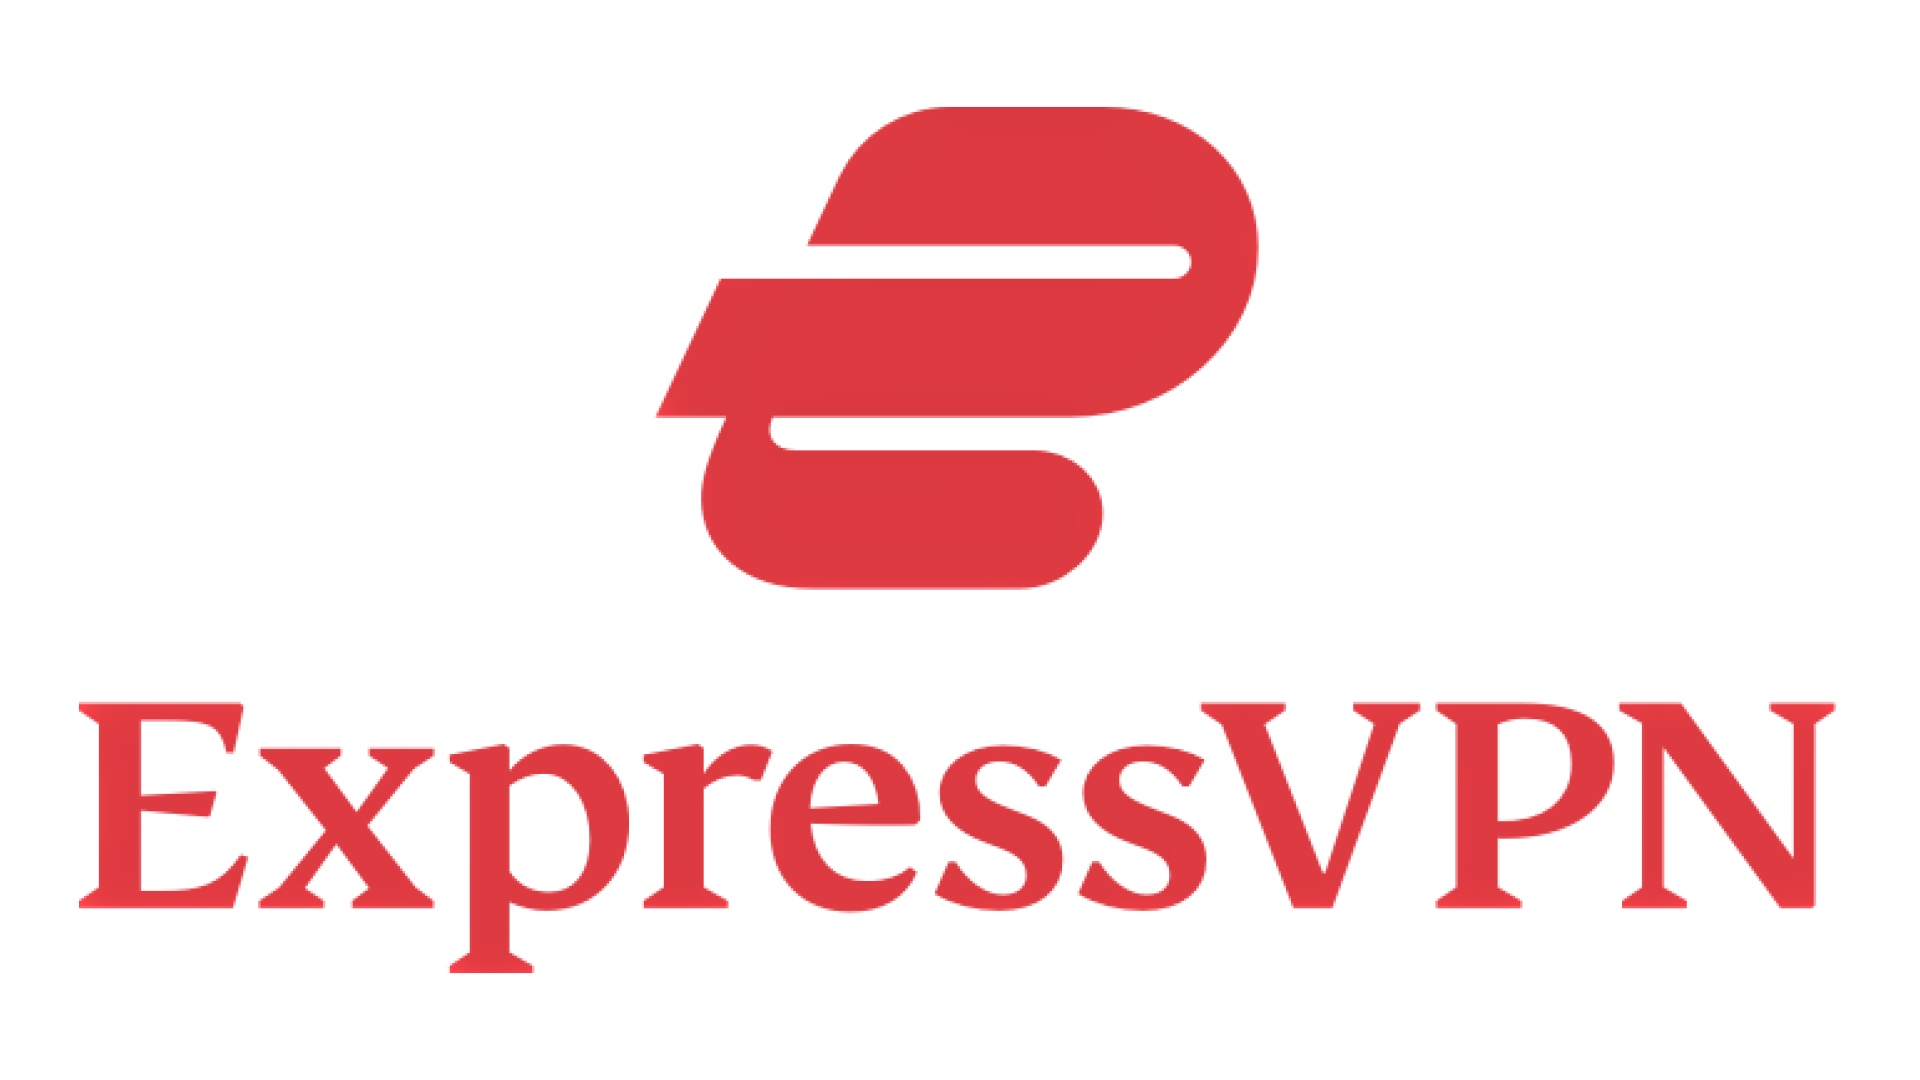 Best Windows 10 VPN - ExpressVPN. Image shows the company's logo.